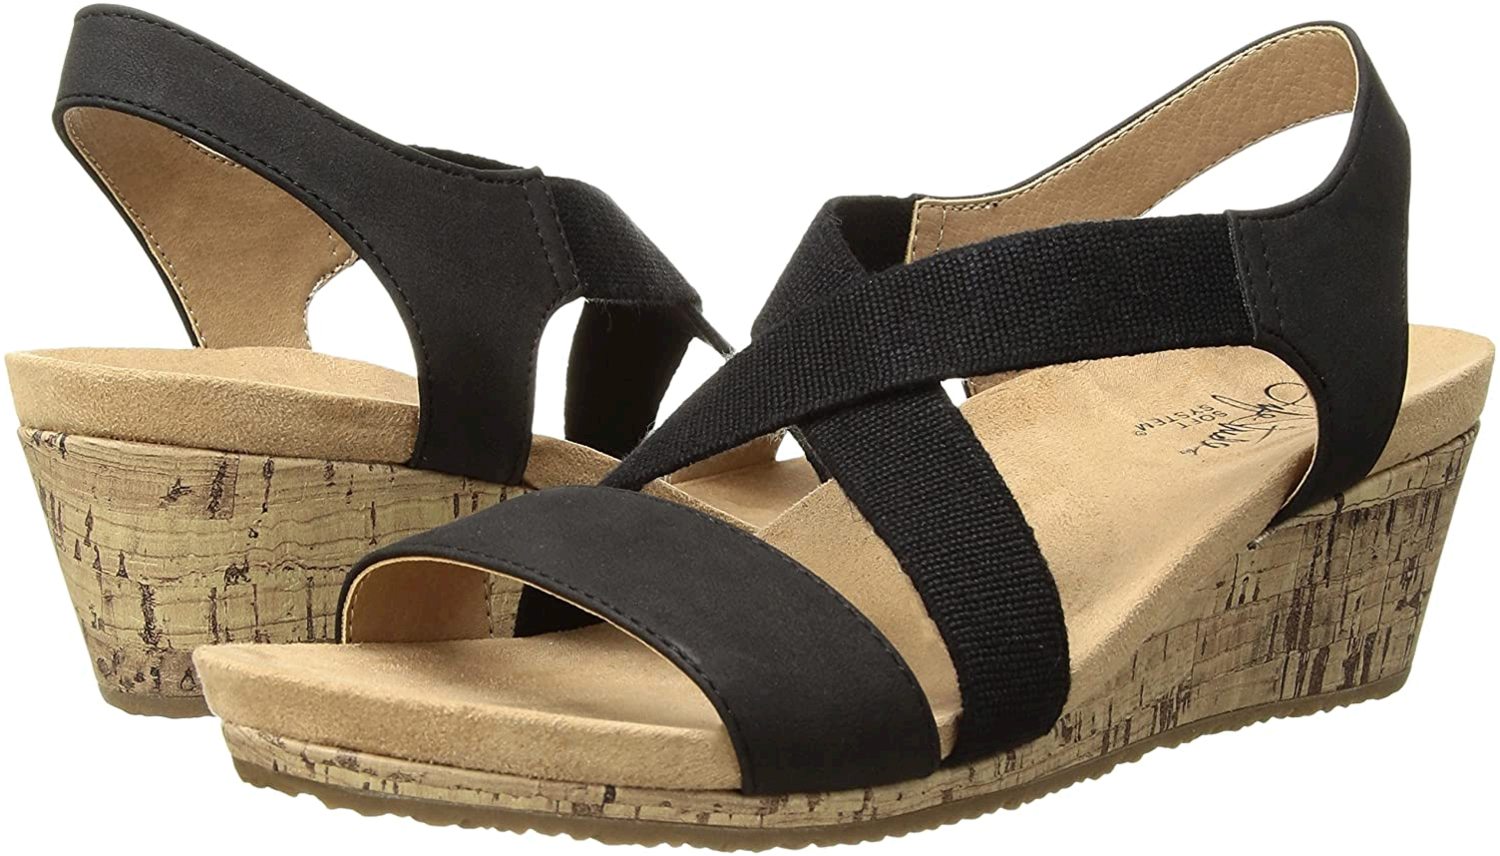 LifeStride Women's Mexico Wedge Sandal, Black, Size 8.0 C3Cr eBay